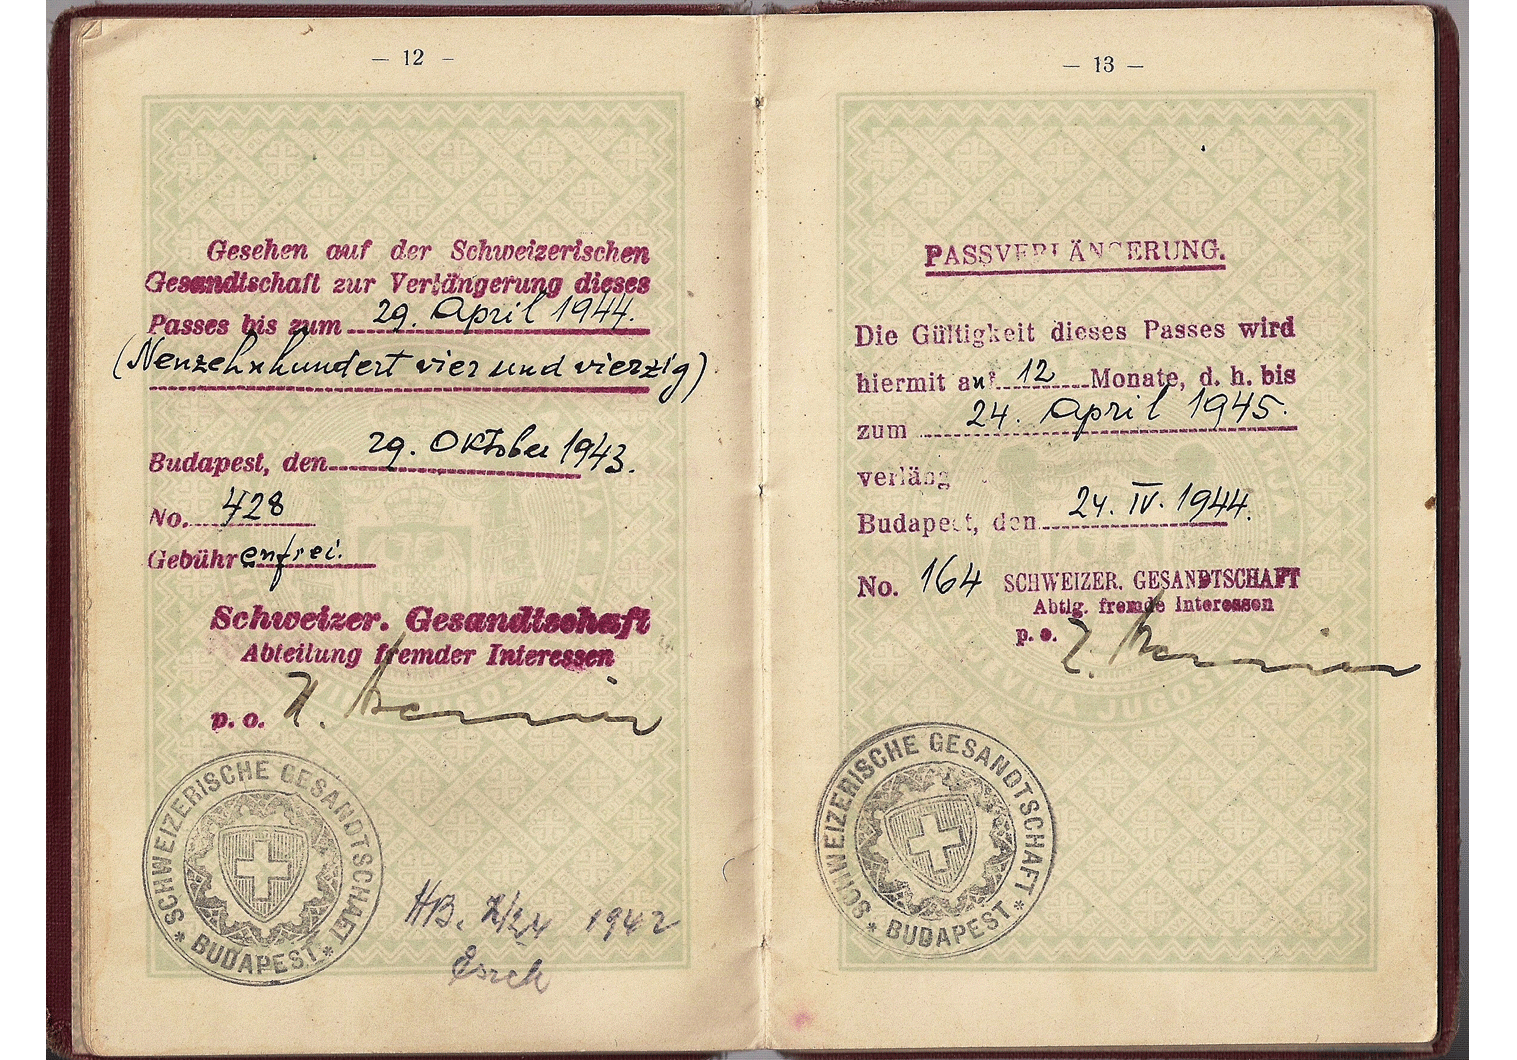 WW2 Jewish passport